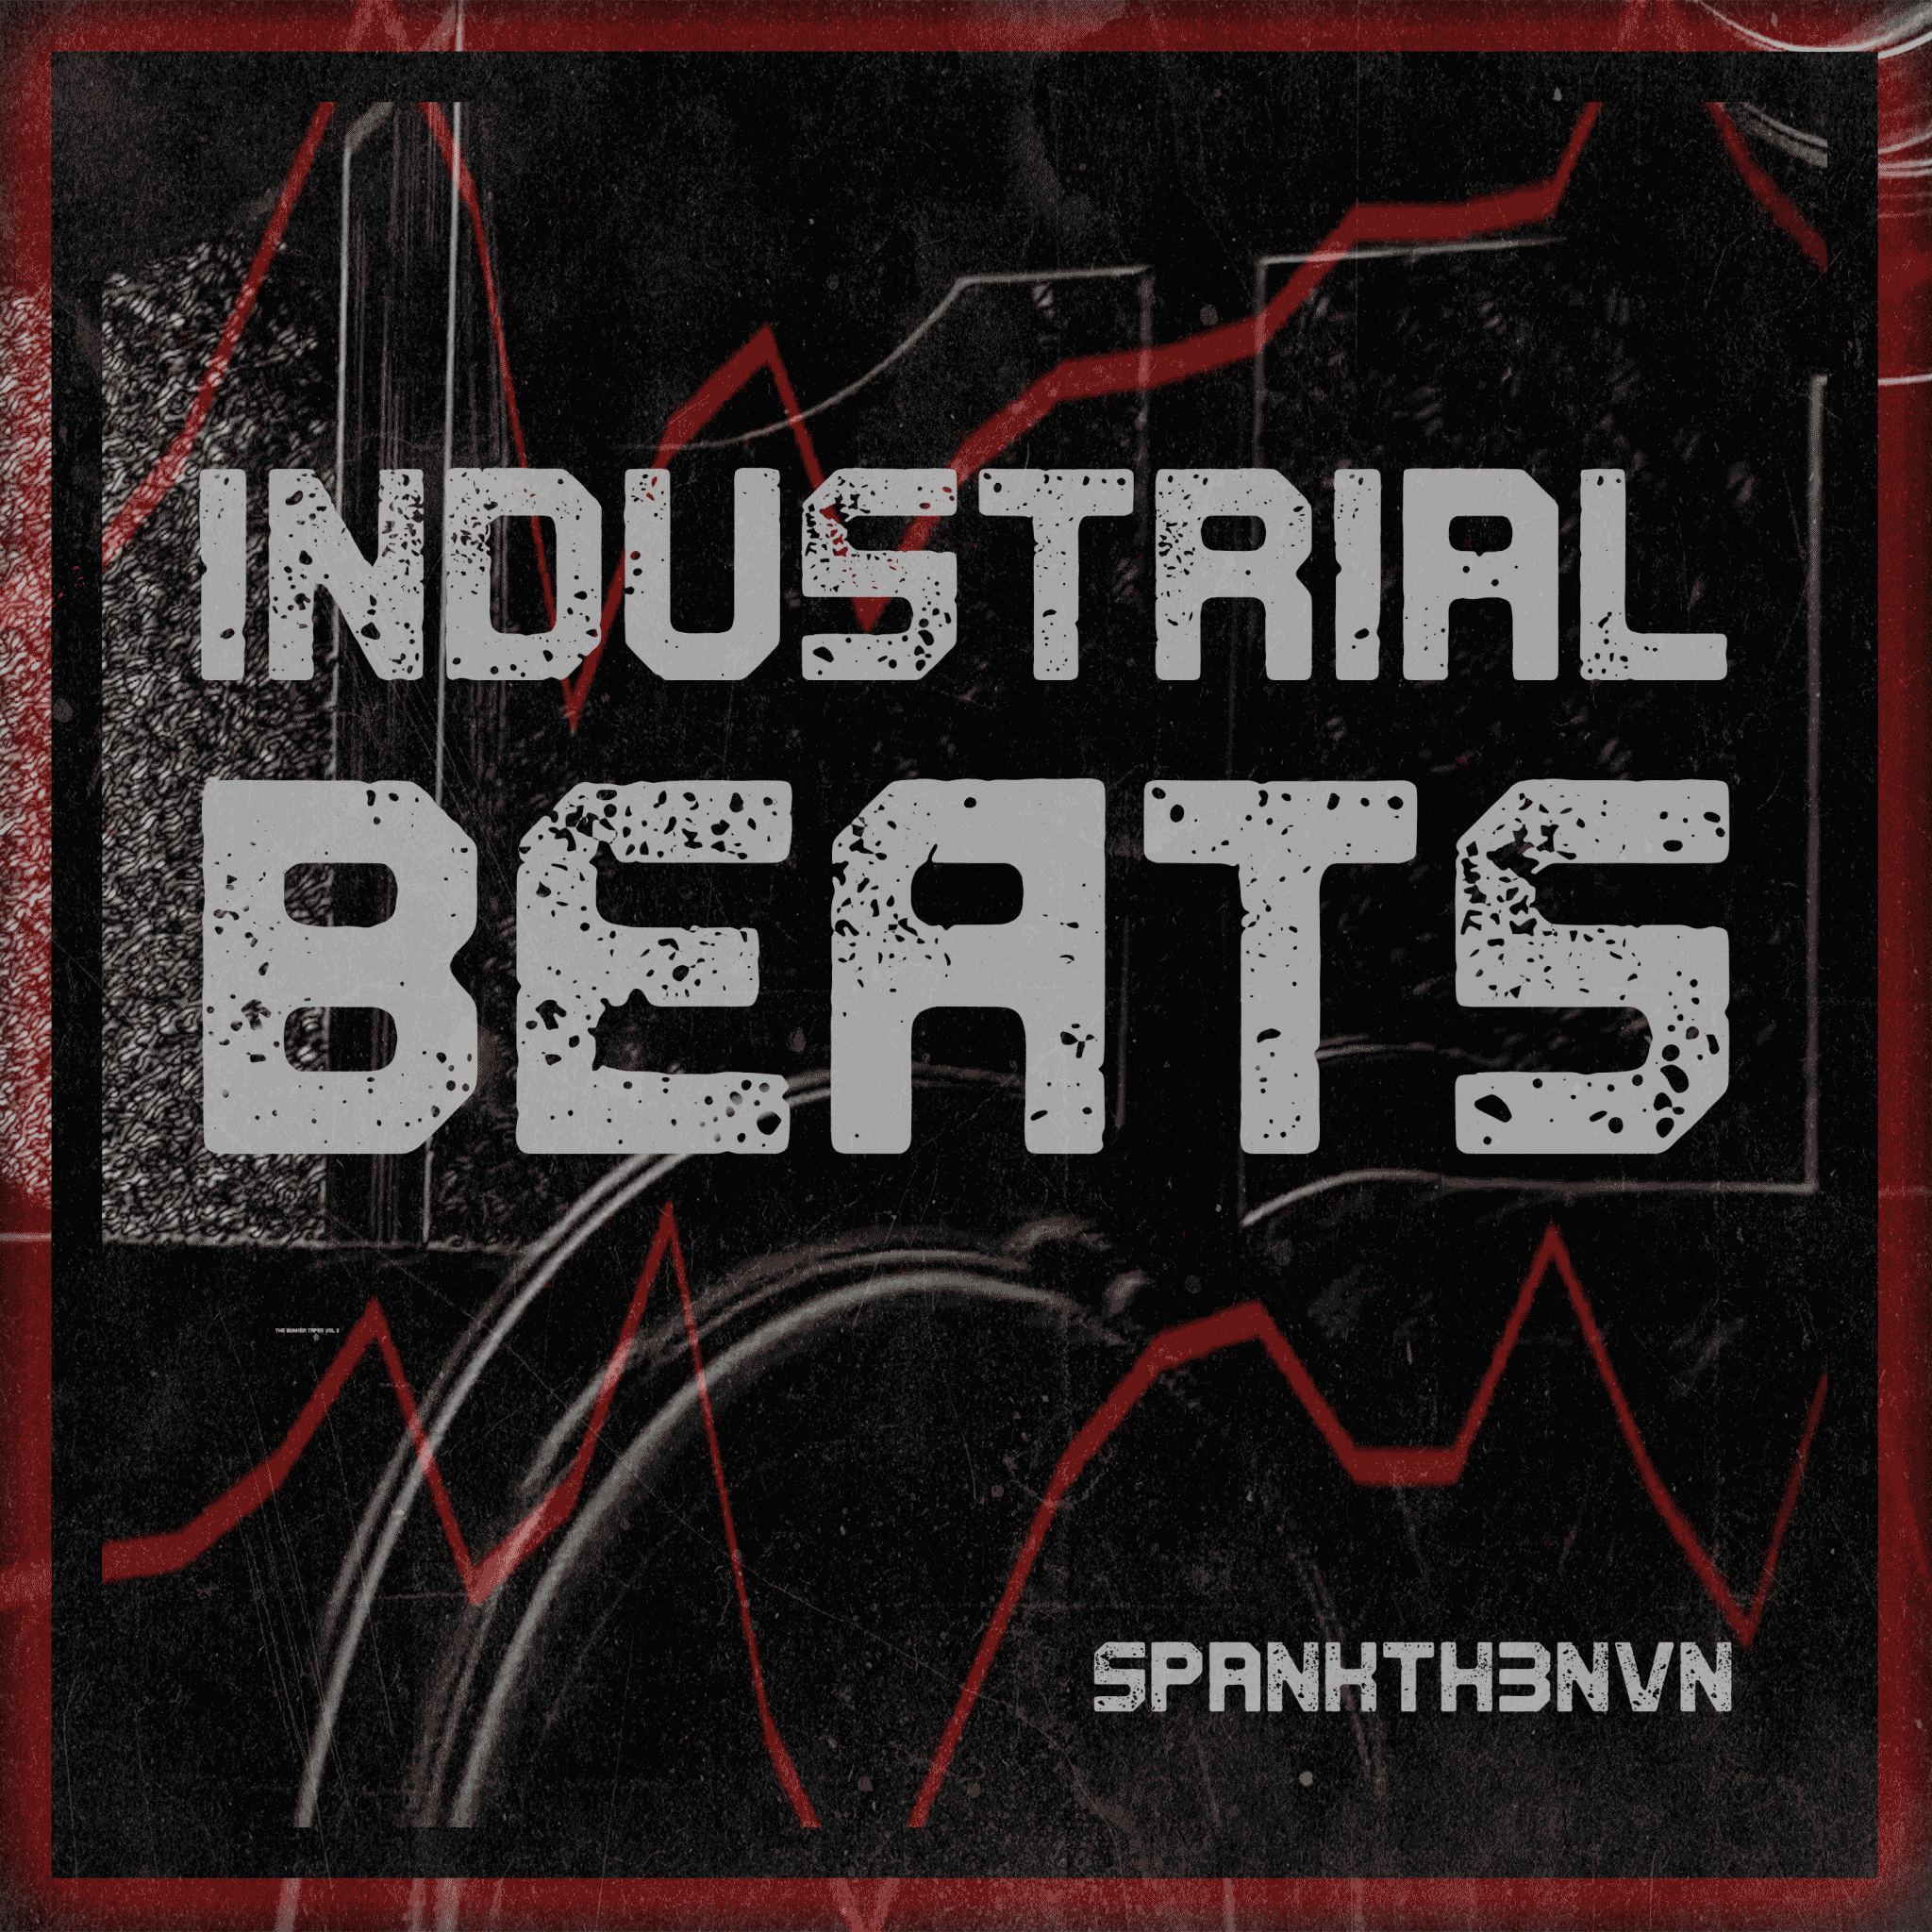 Spankthenun – Industrial Beats